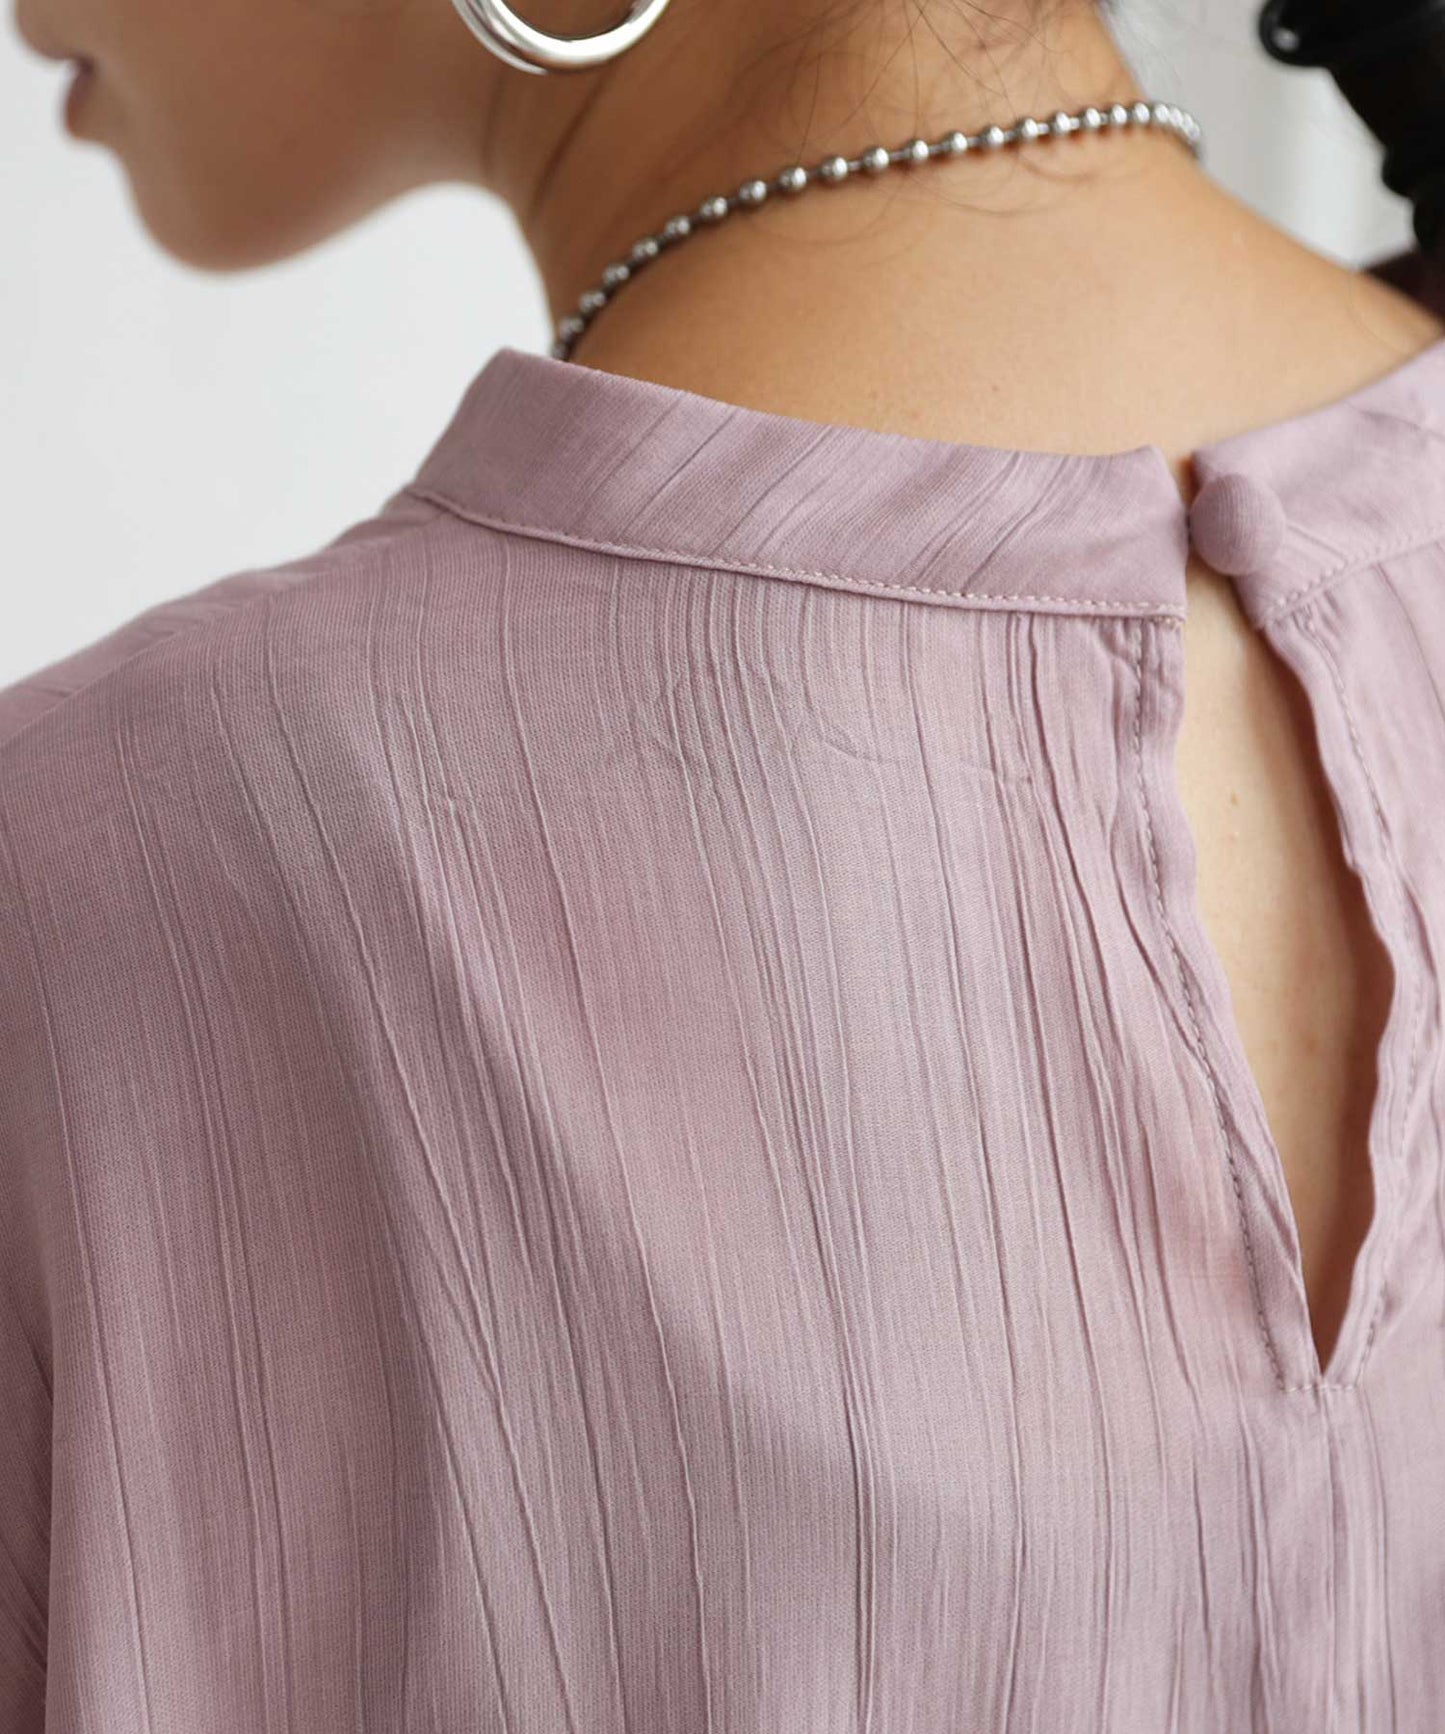 Back slit Ladies blouse Long-Sleeve